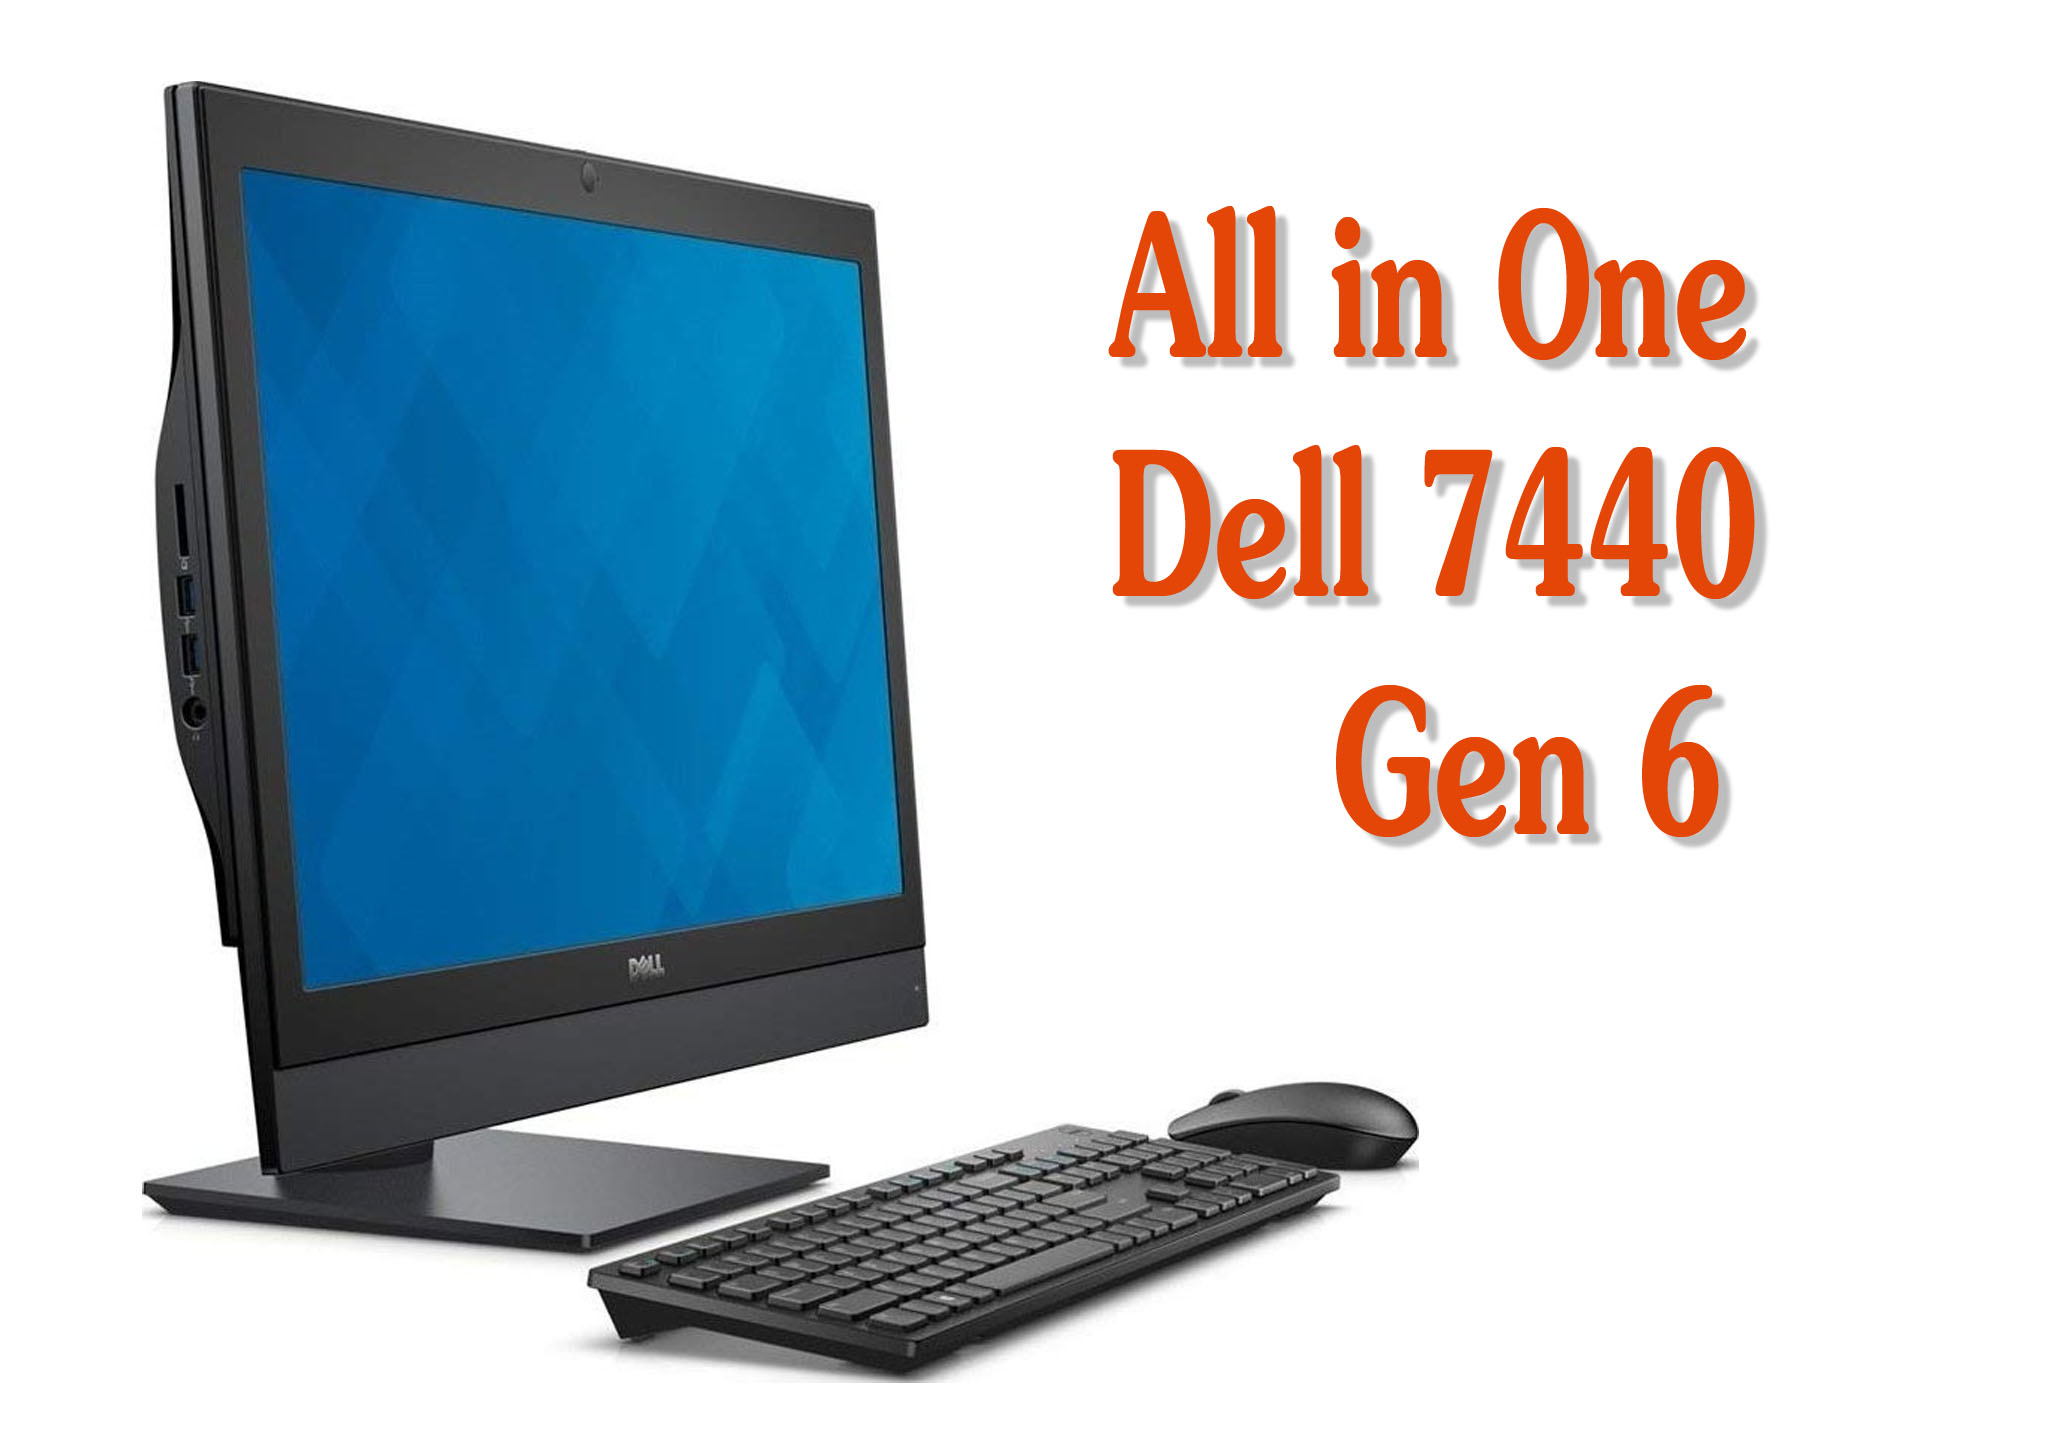 All in One Dell OptiPlex 7440, Core i7 Gen 6, 8GB DD4, SSD M2 256G 24in LED IPS